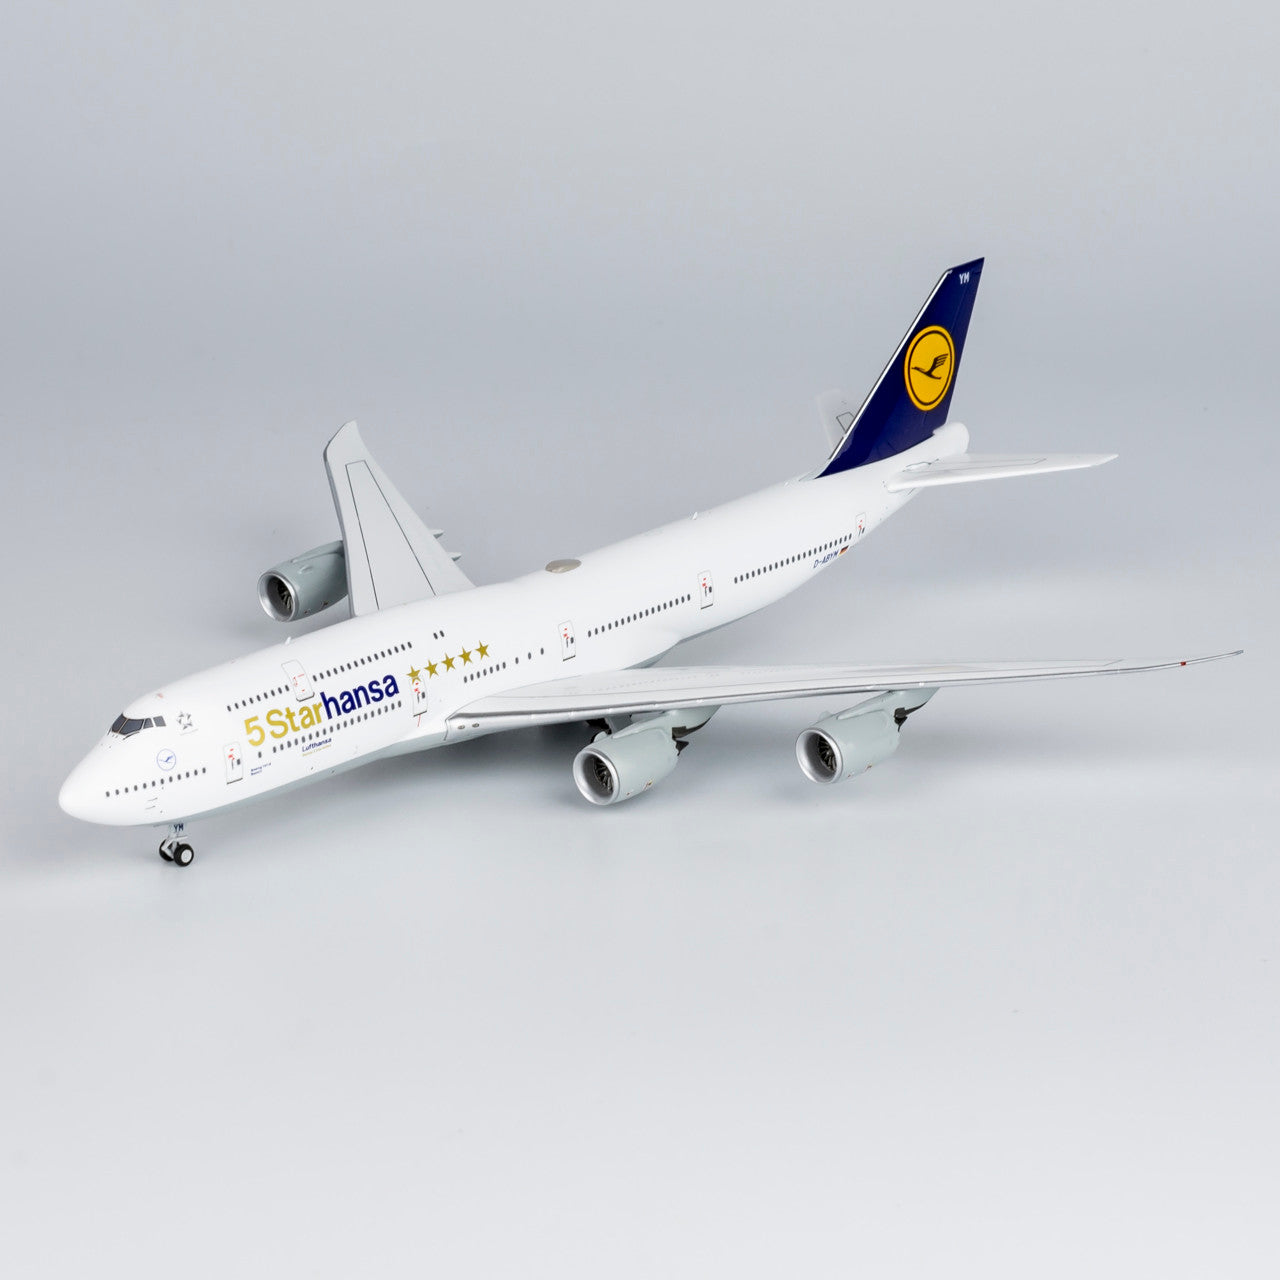 NG 78011 1:400 Lufthansa 747-8 D-ABYM "5 Starhansa titles"